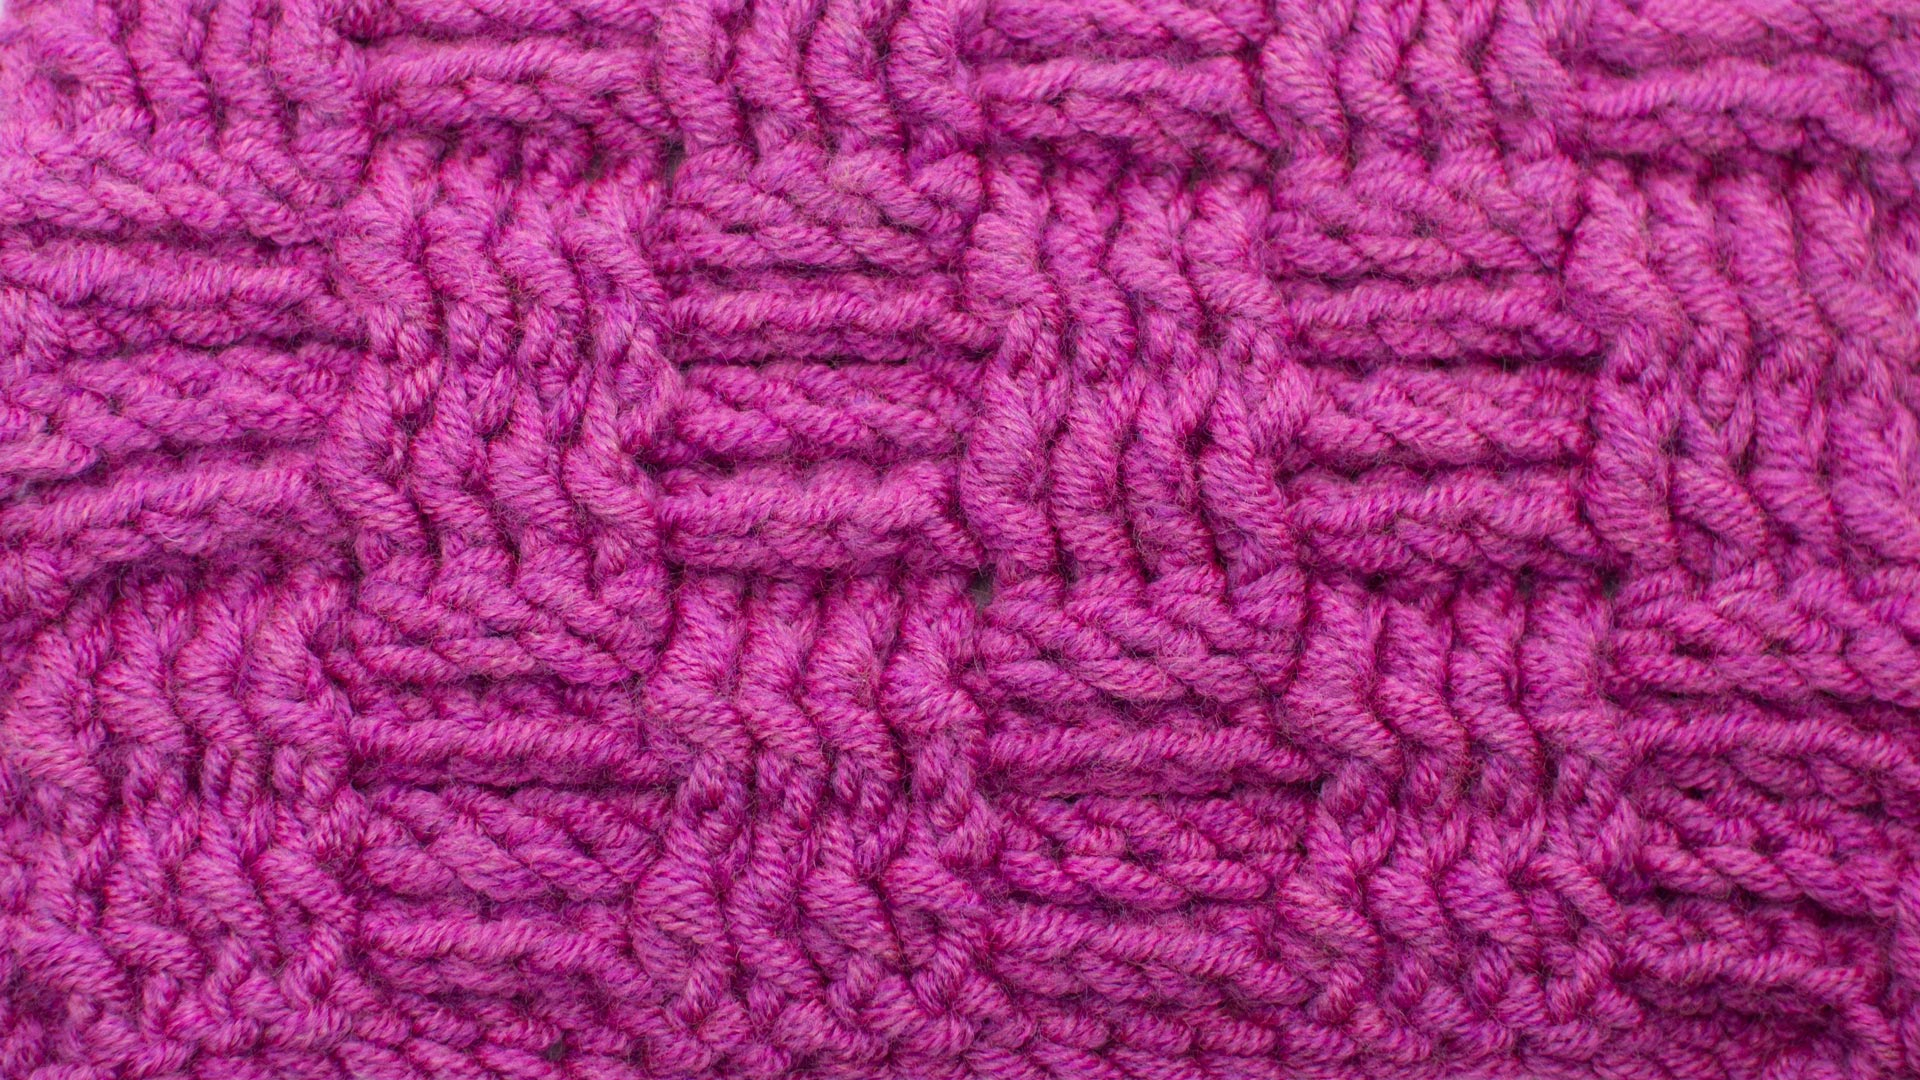 Basket Weave Crochet Pattern Basketweave Stitch Crochet Stitch New Stitch A Day